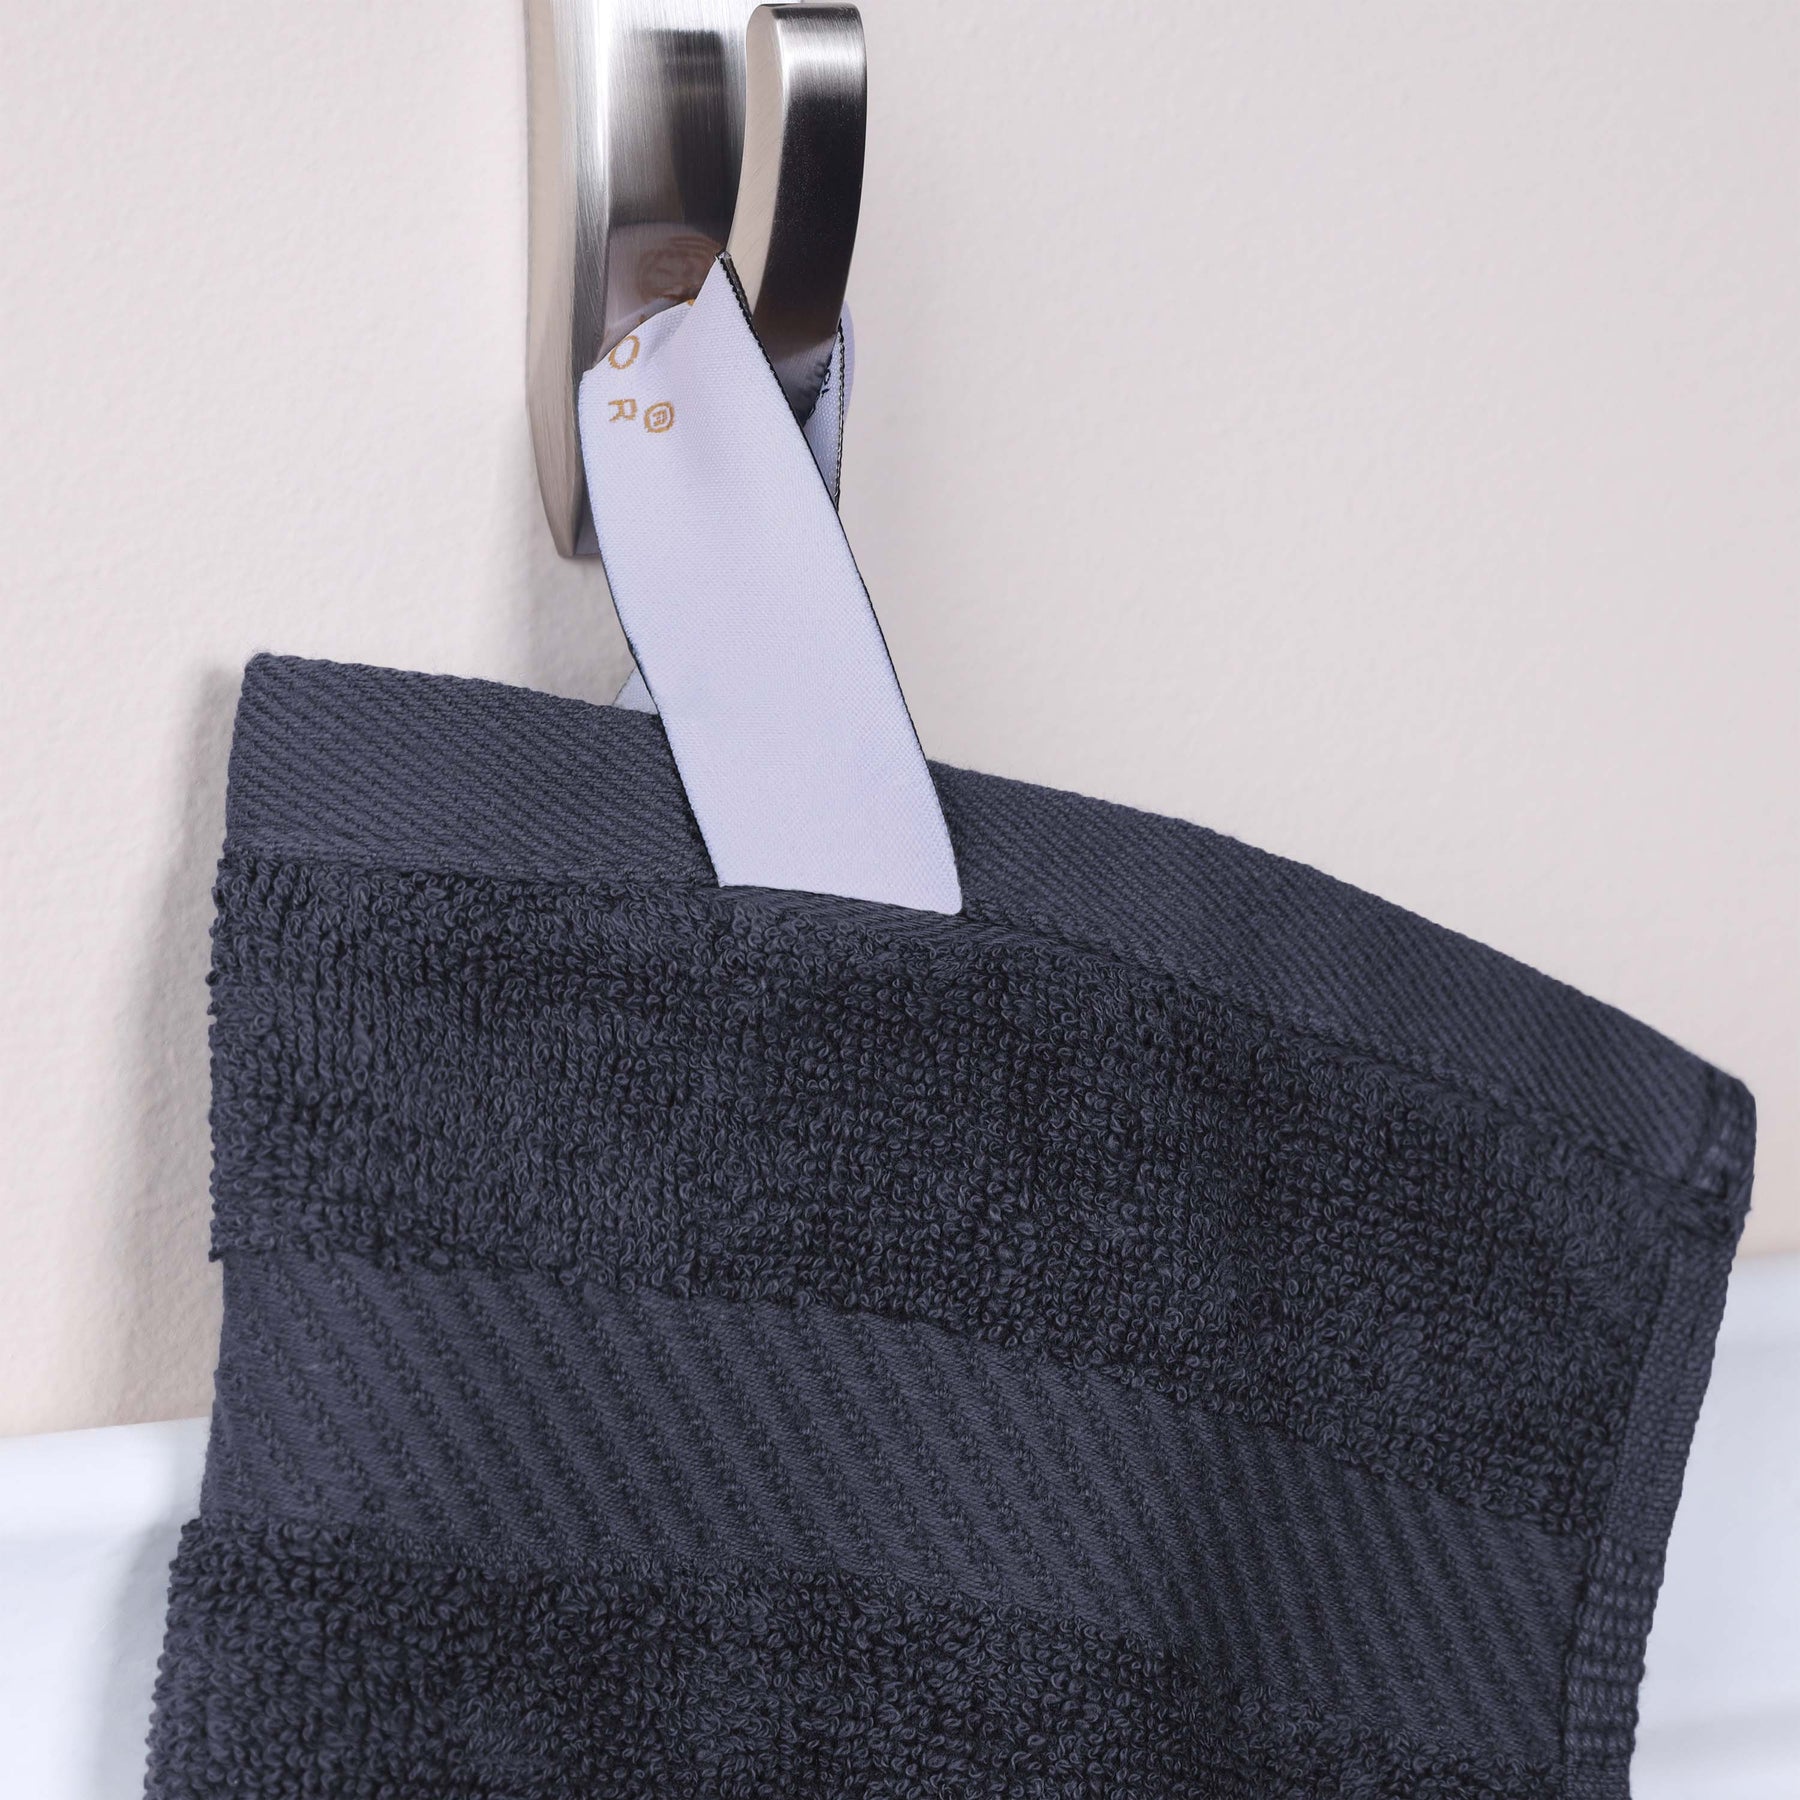 Kendell Egyptian Cotton Solid Medium Weight Bath Towel Set of 2 - Black